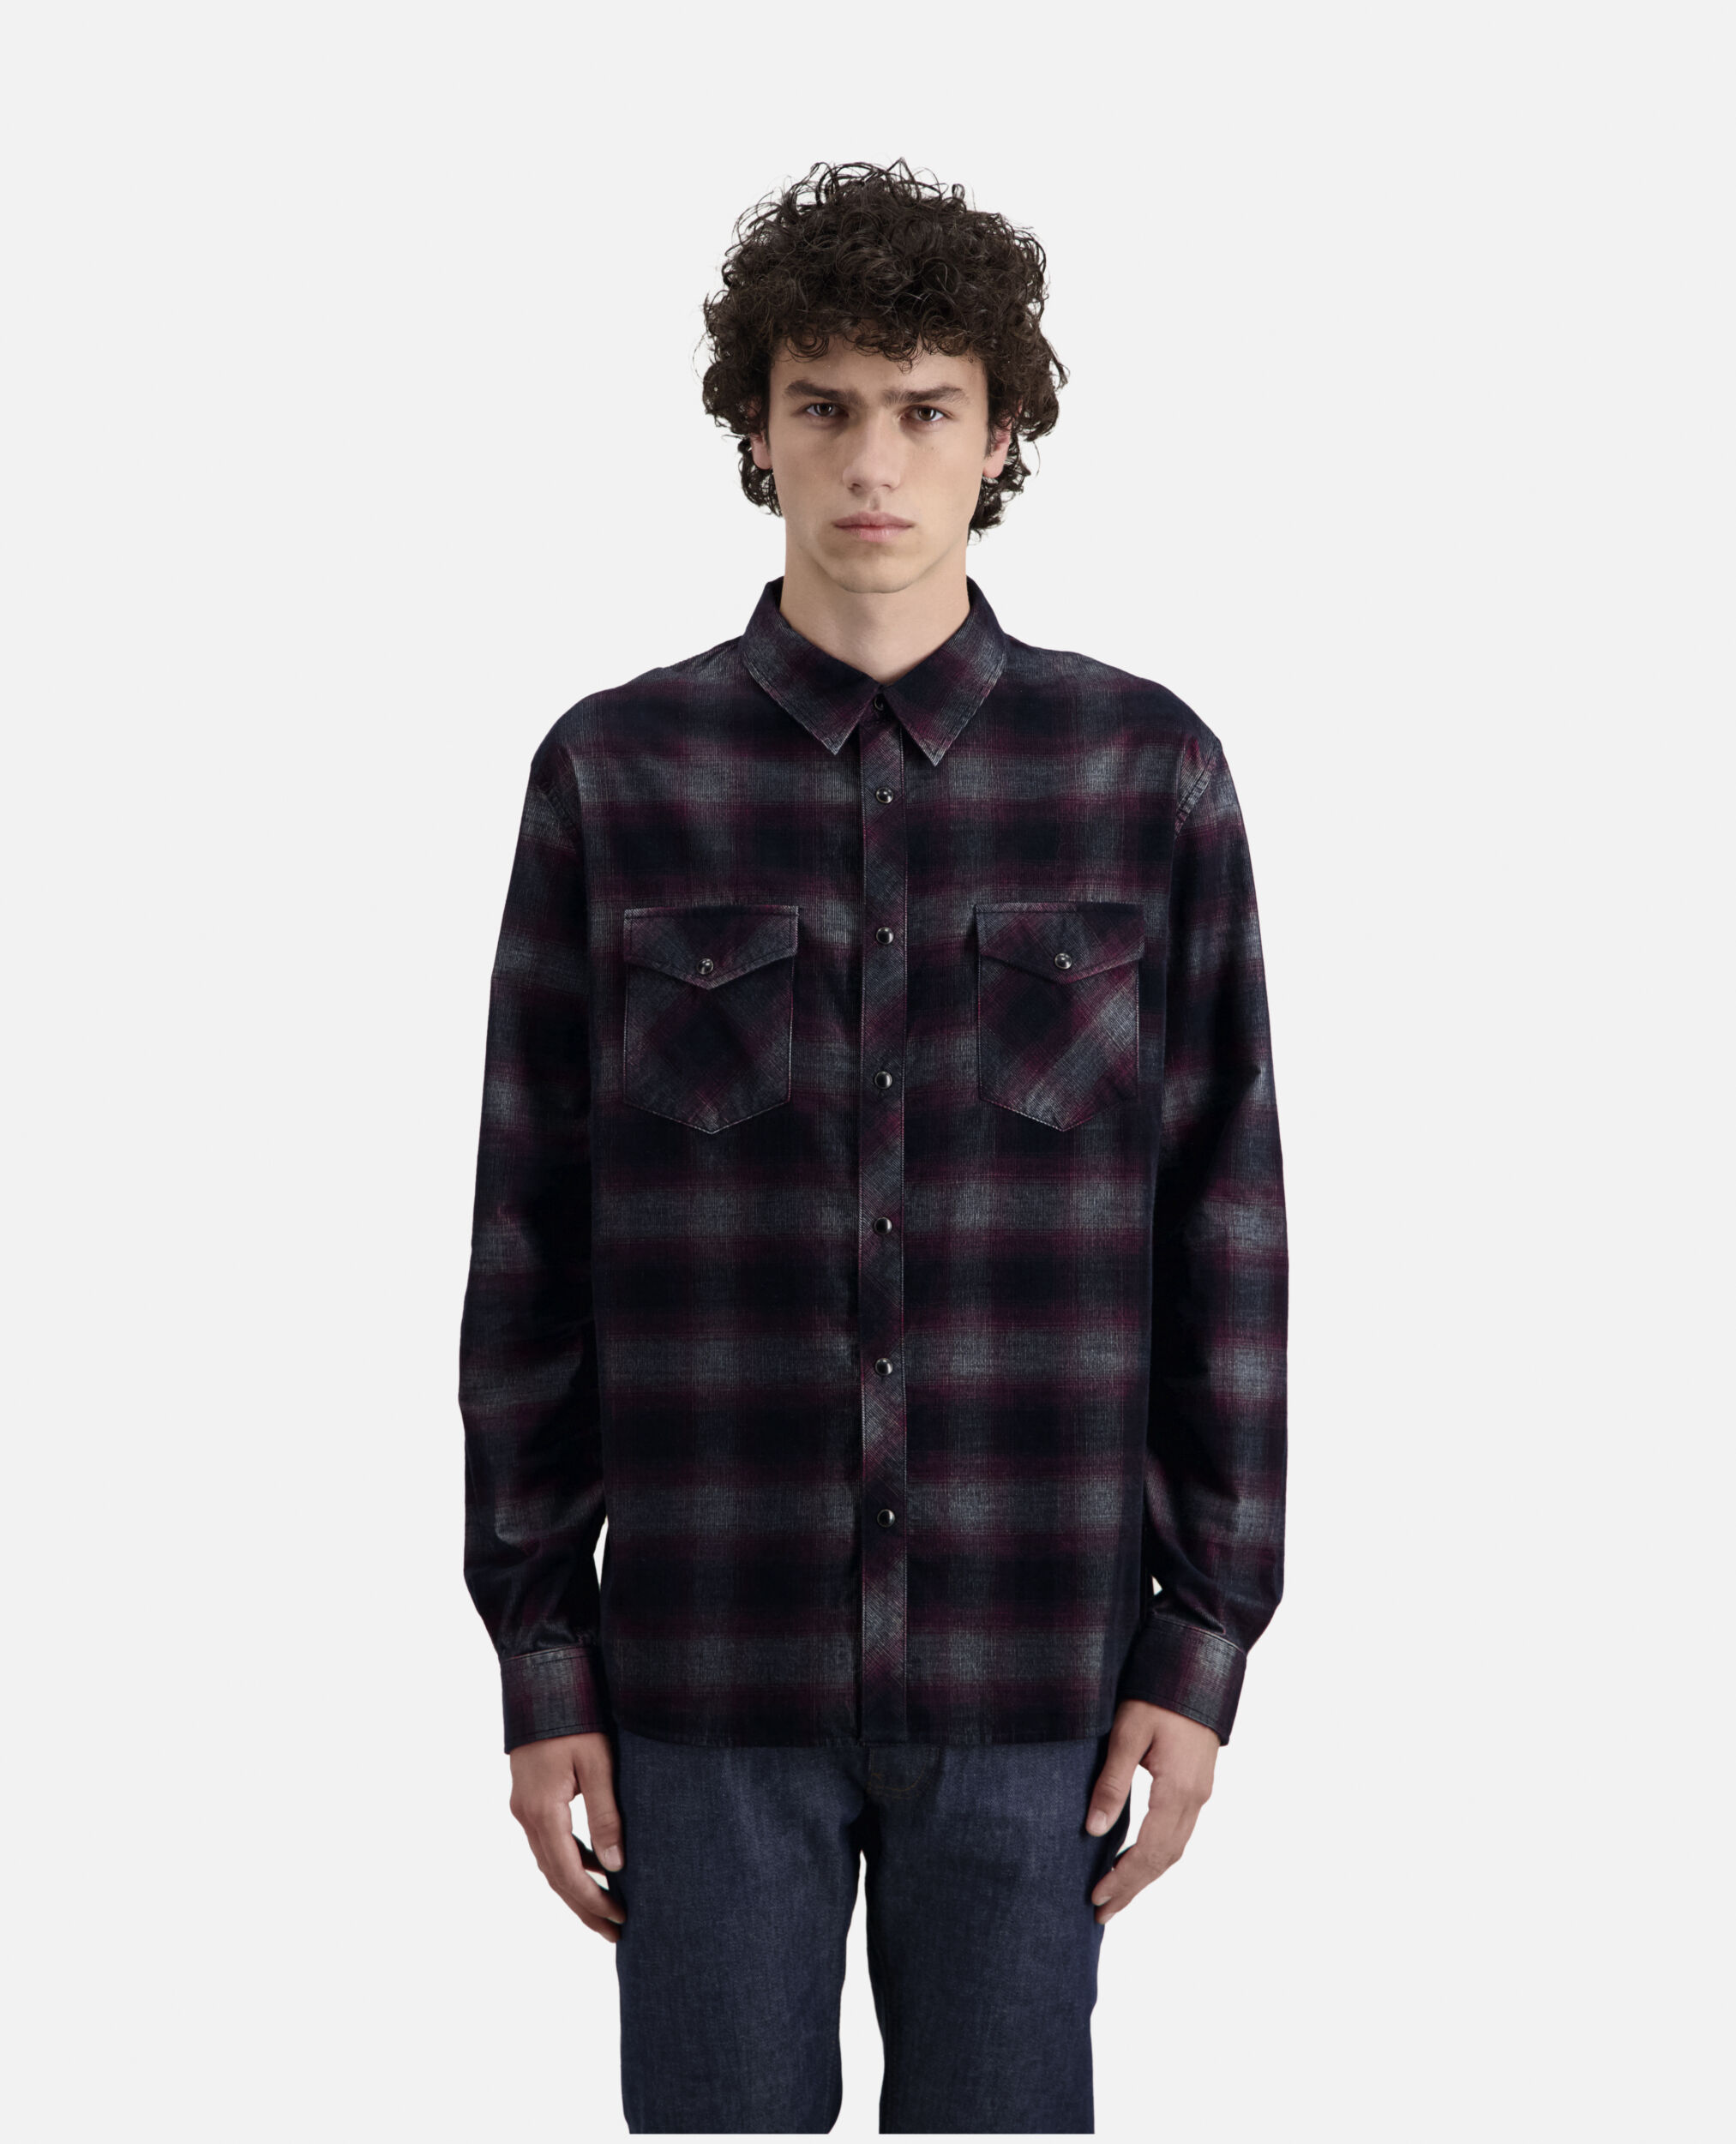 Black and burgundy checkered shirt, BLACK / BURGUNDY, hi-res image number null